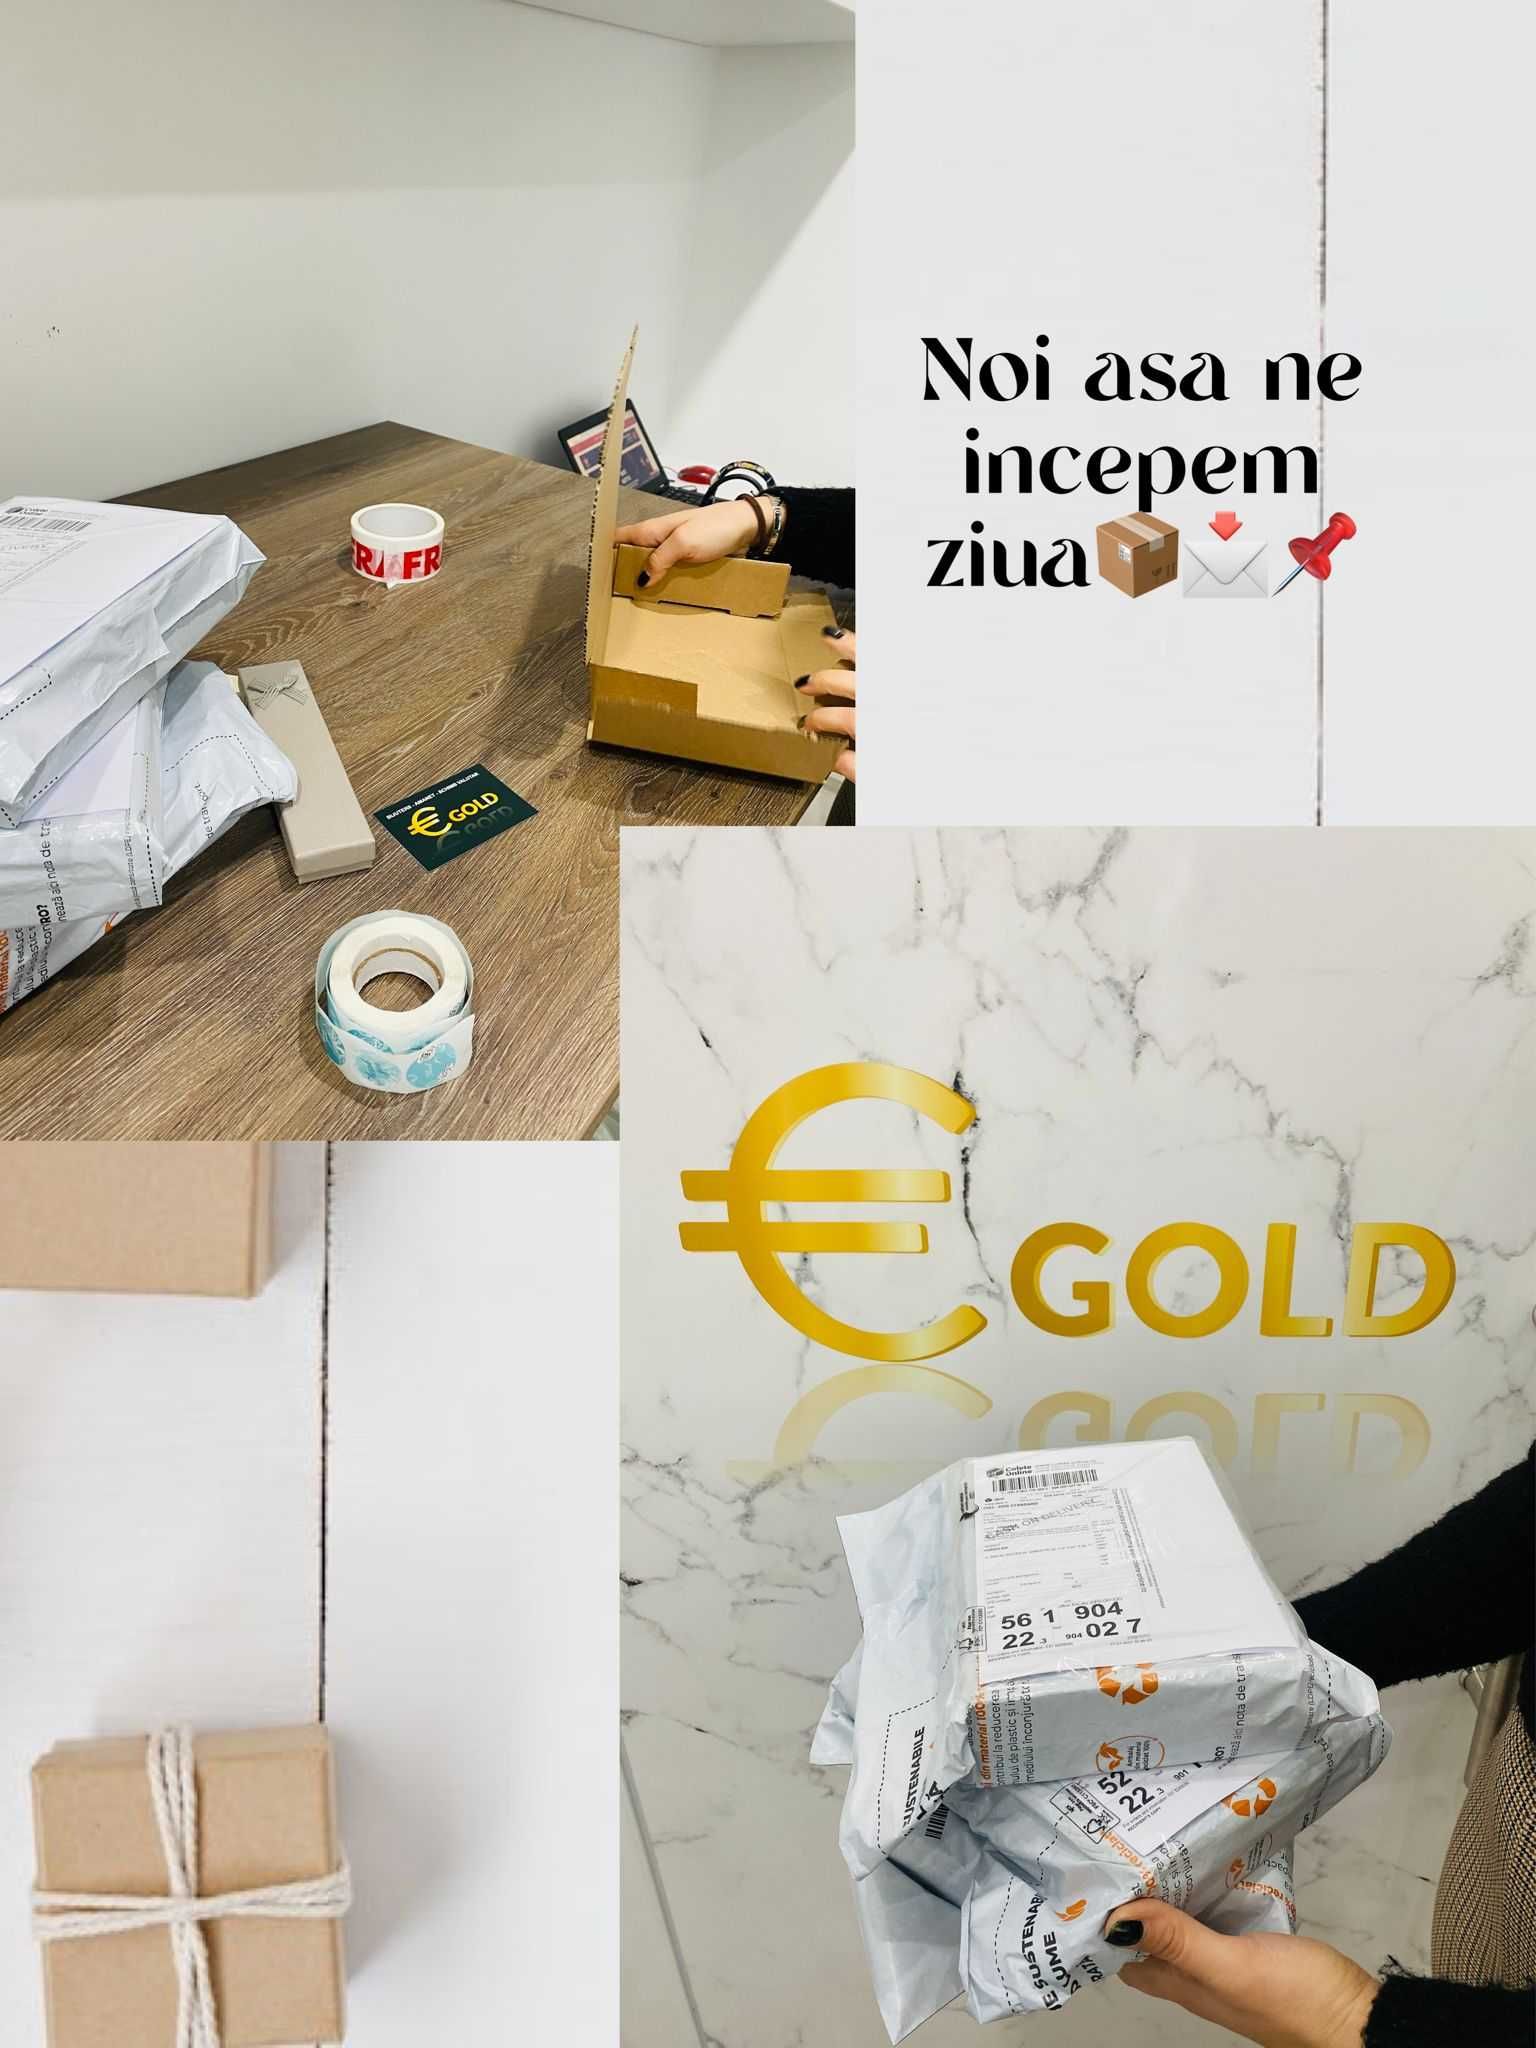 (2878) Lant Aur 14k, 6,62 grame FB Bijoux Euro Gold